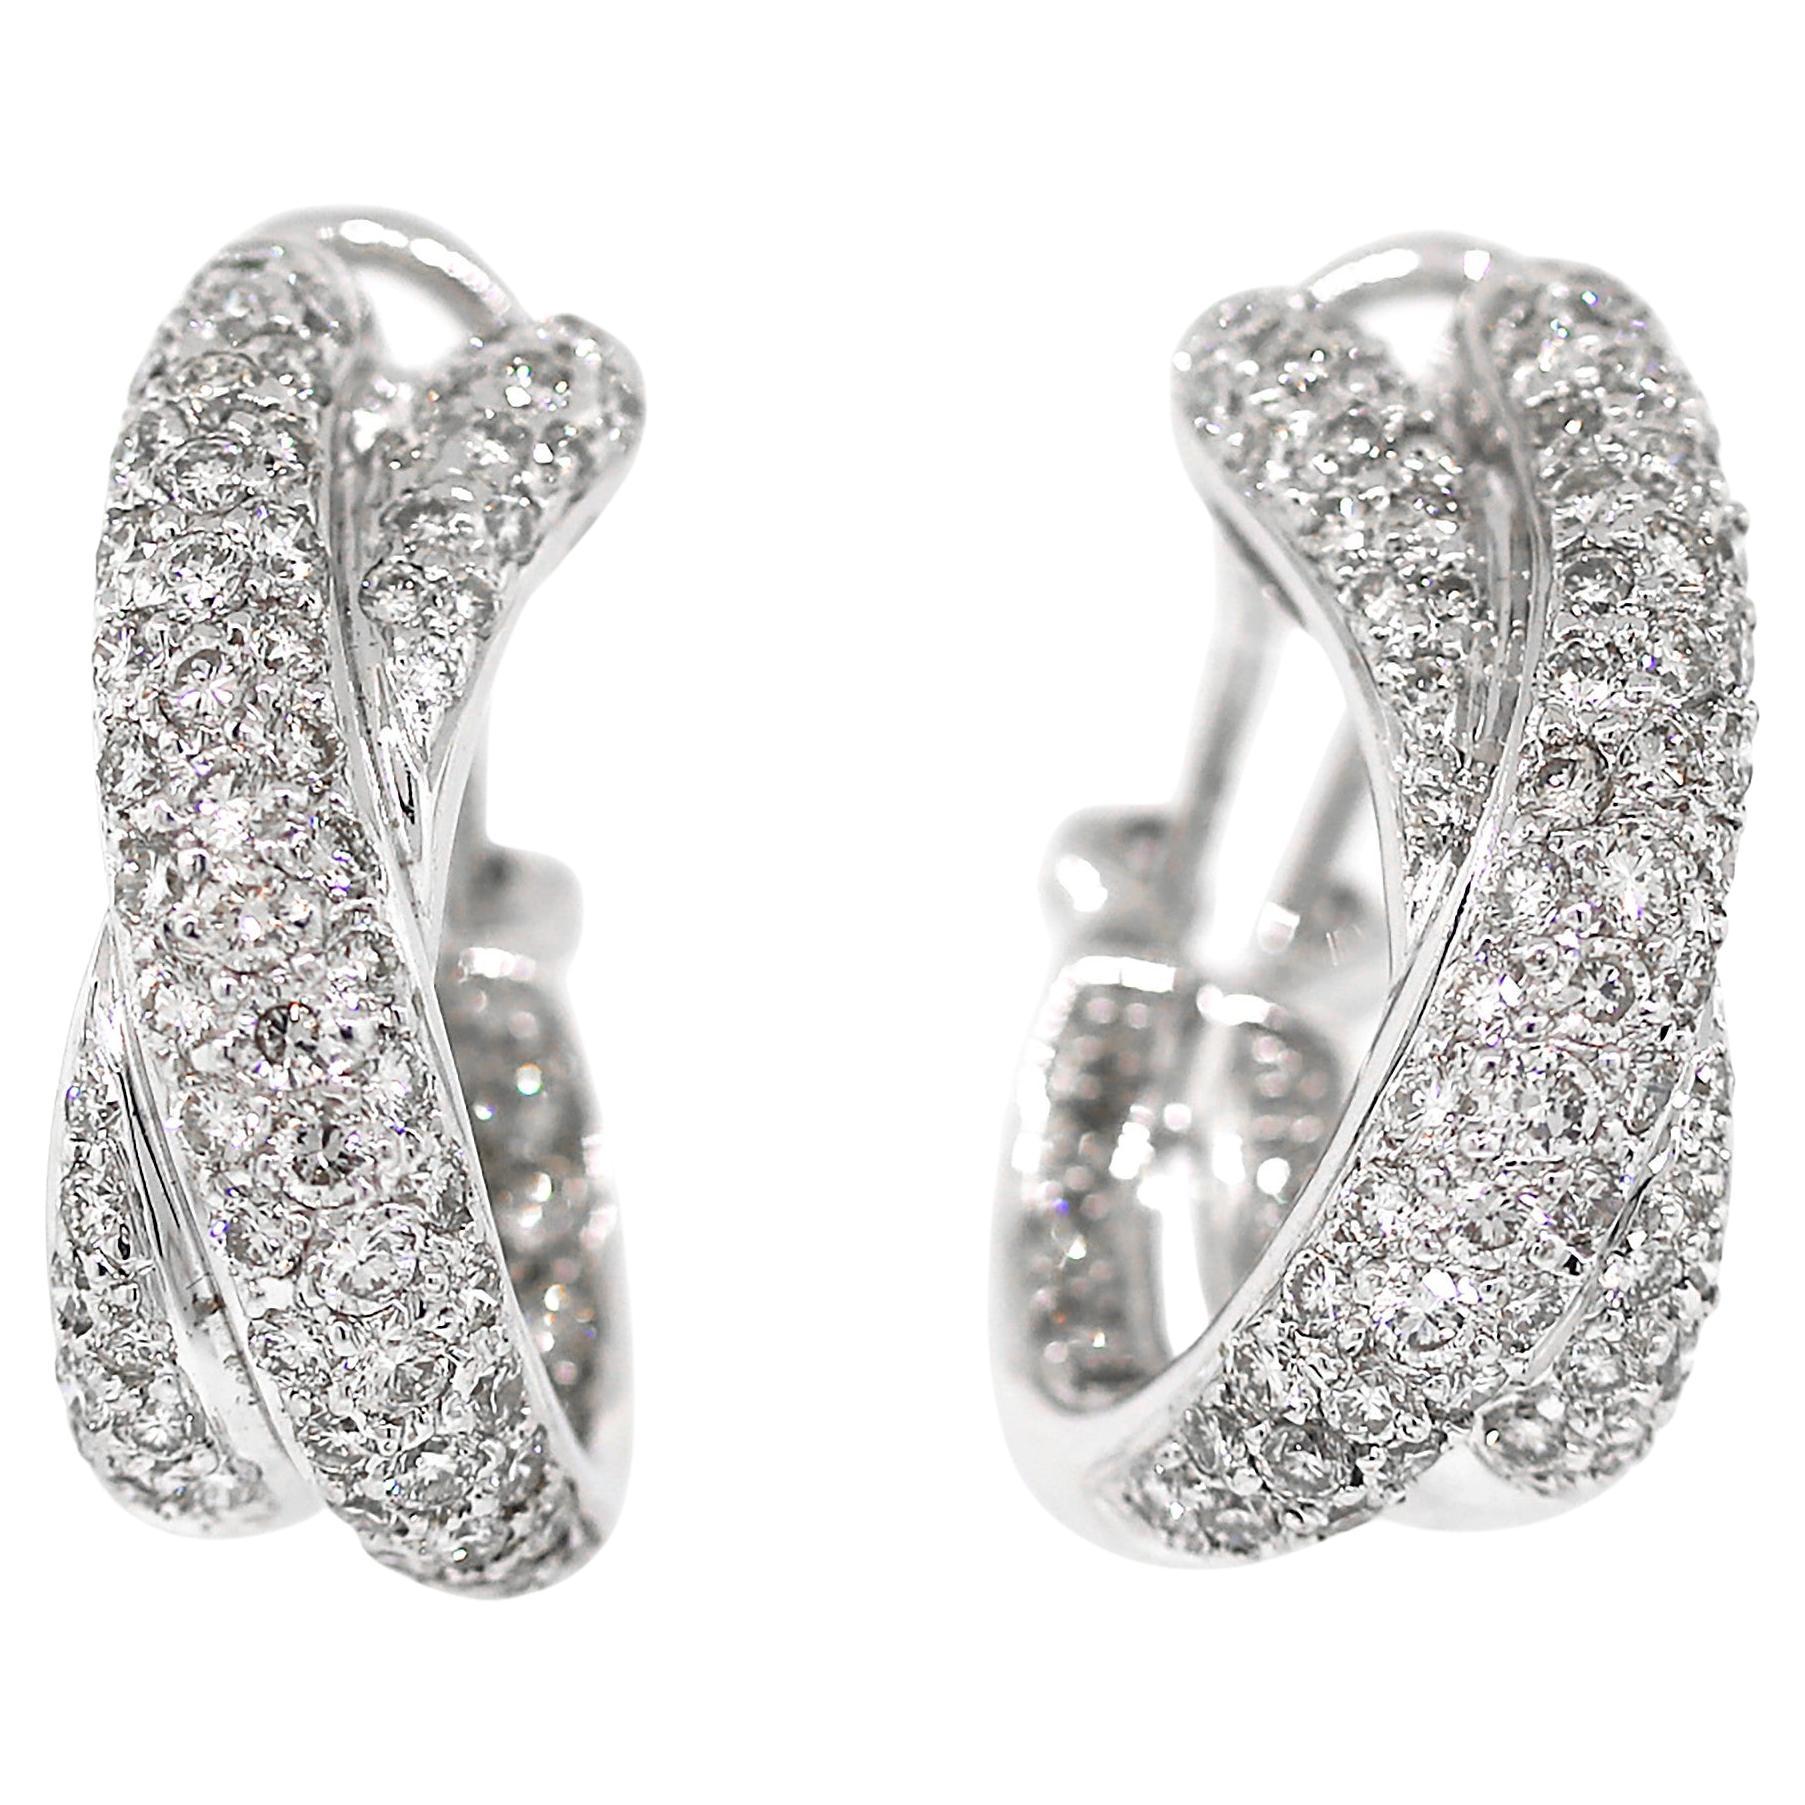 2.06 carat Diamond Crossover Earrings in 18 kt White Gold For Sale